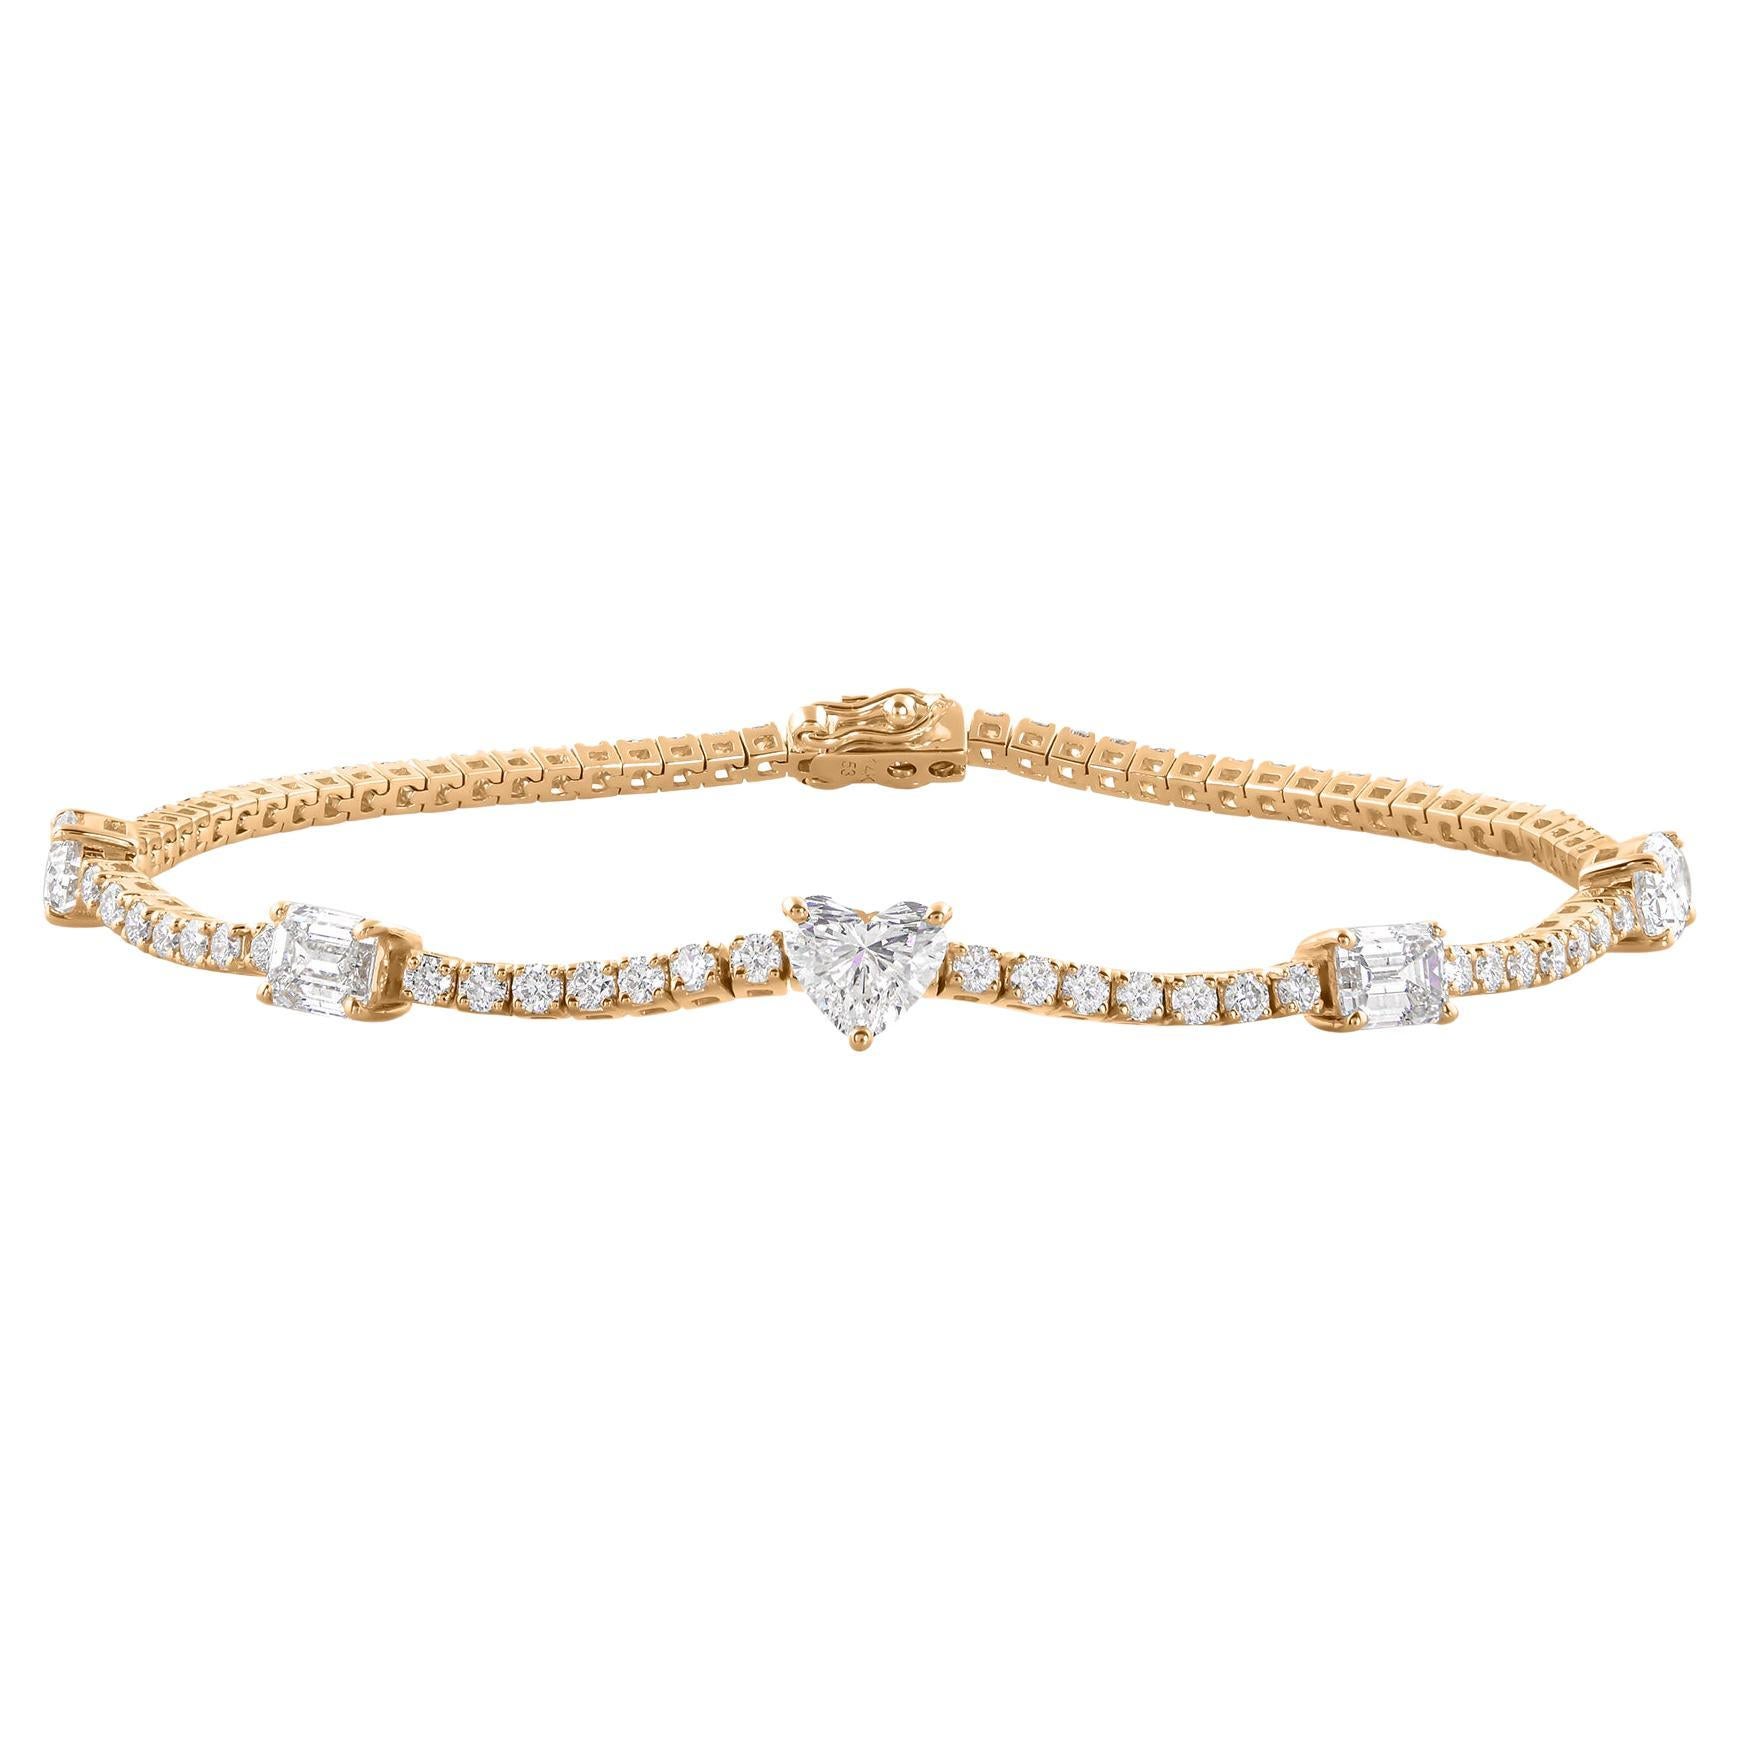 3.64 Carat Multi Shape Diamond Bracelet 14 Karat Yellow Gold Handmade Jewelry